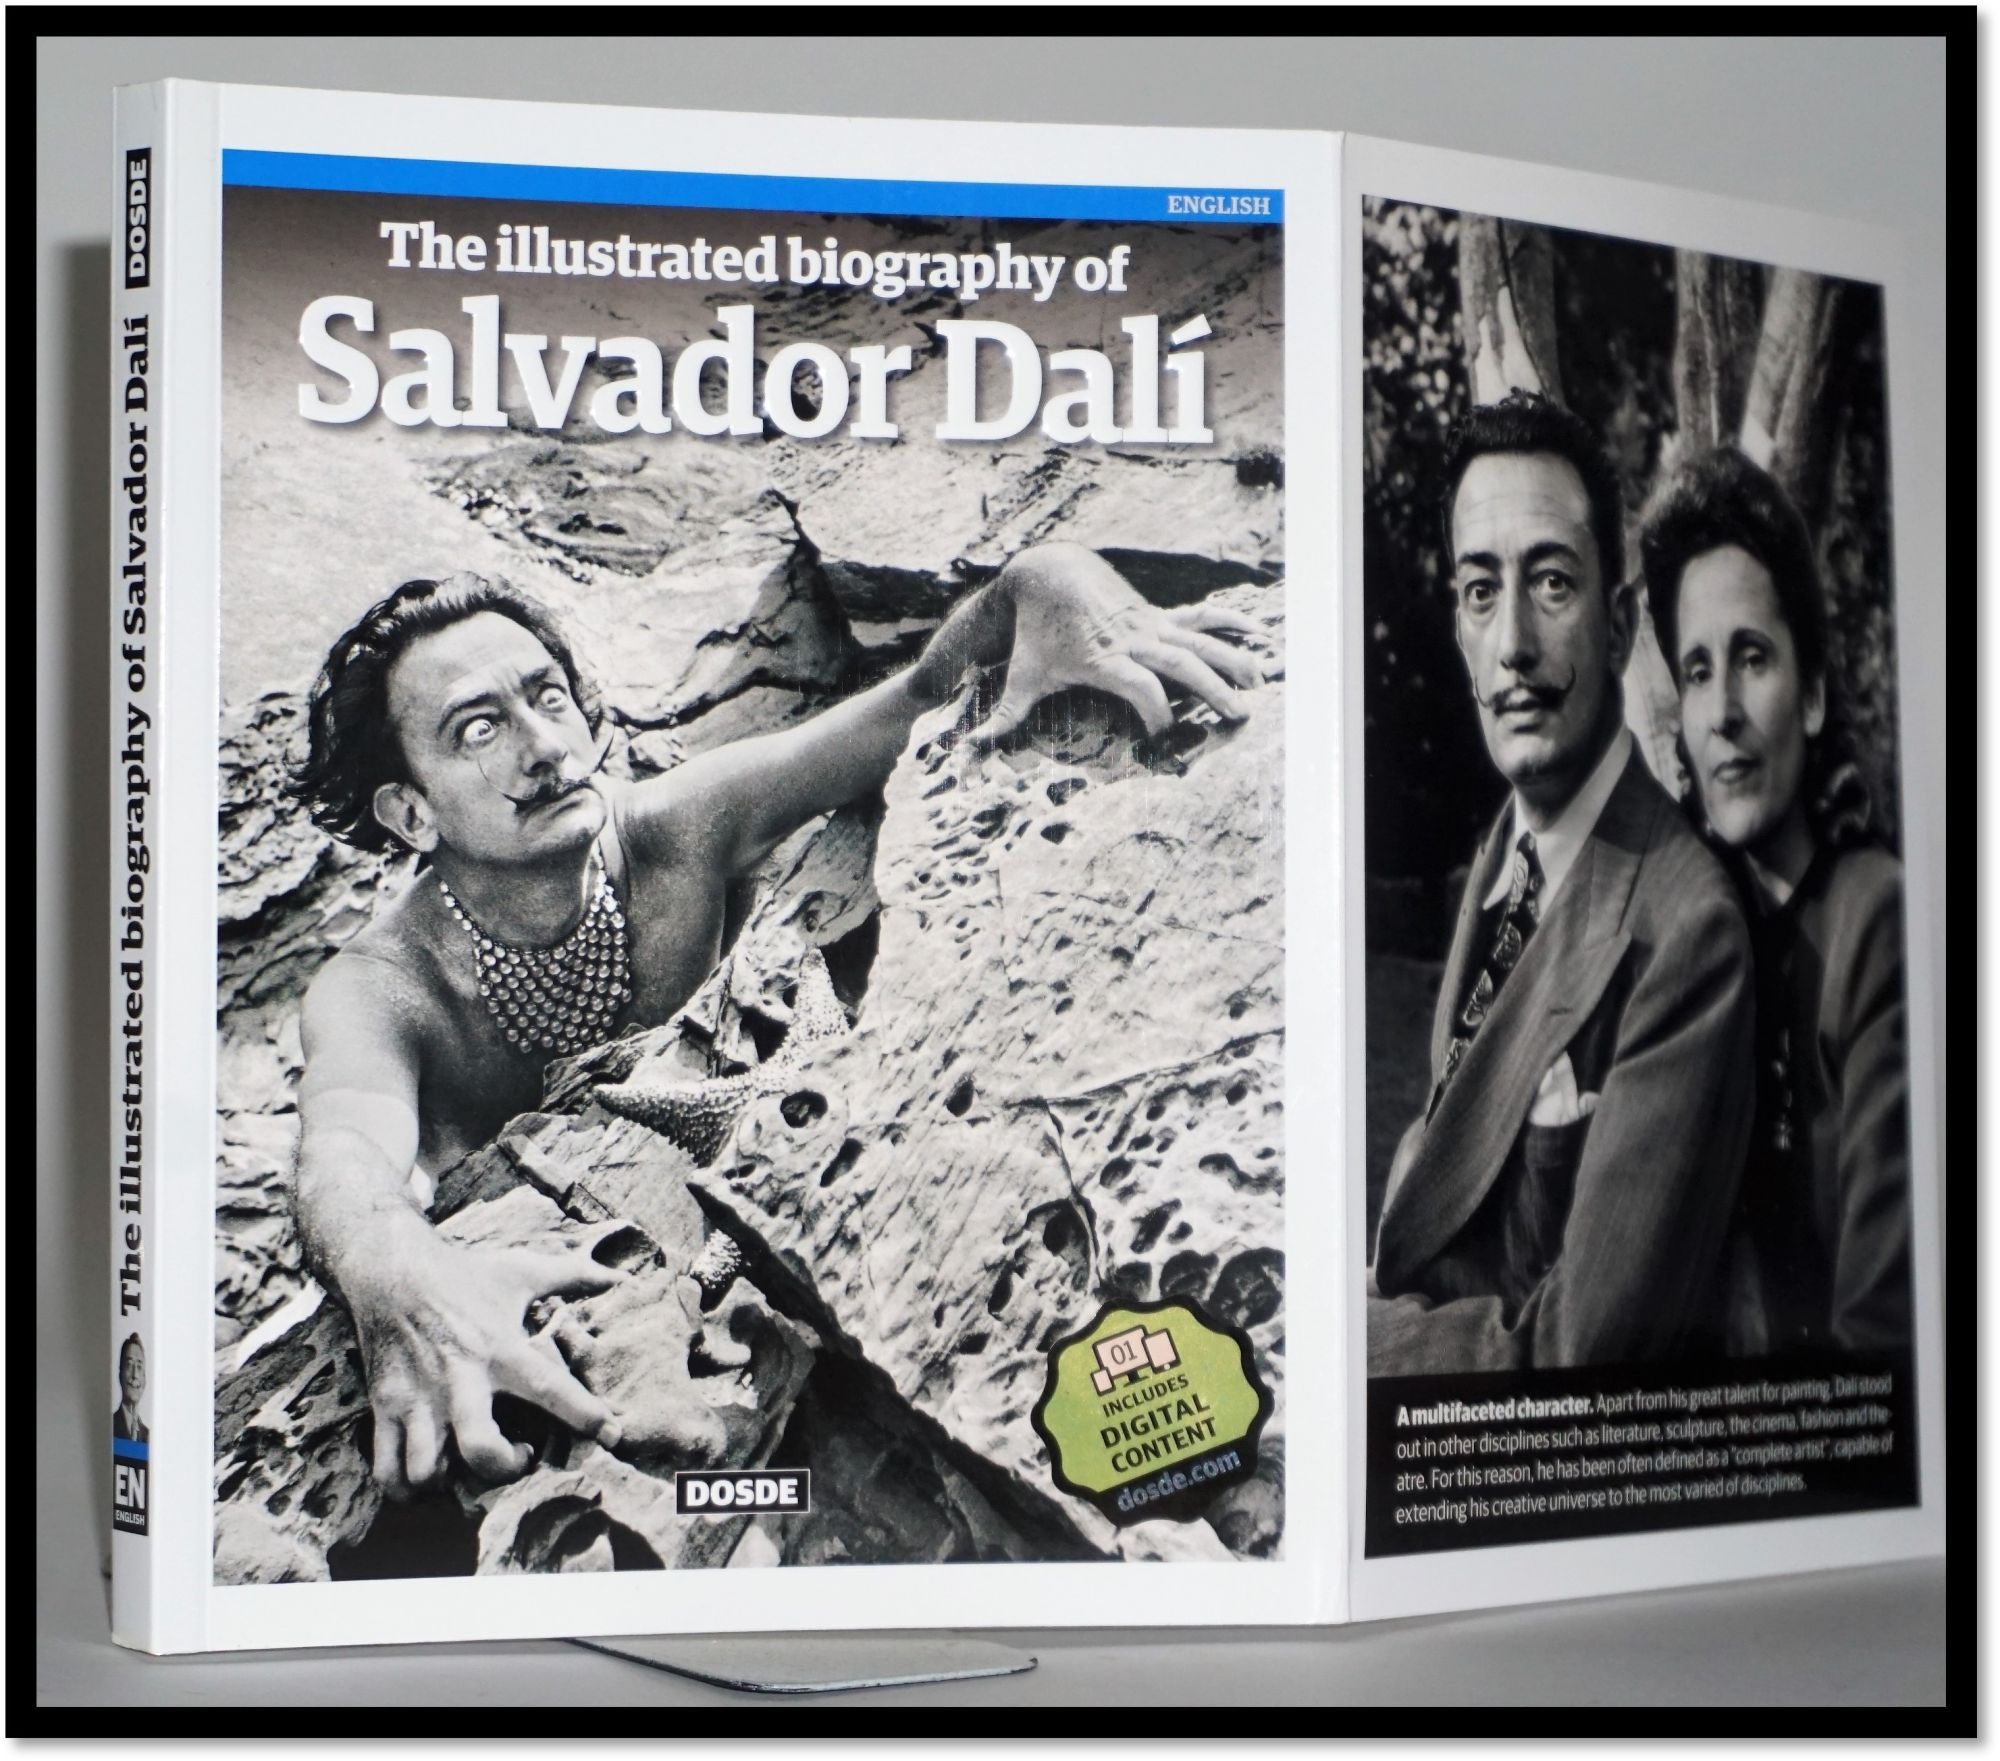 Salvador Dalí - Biography